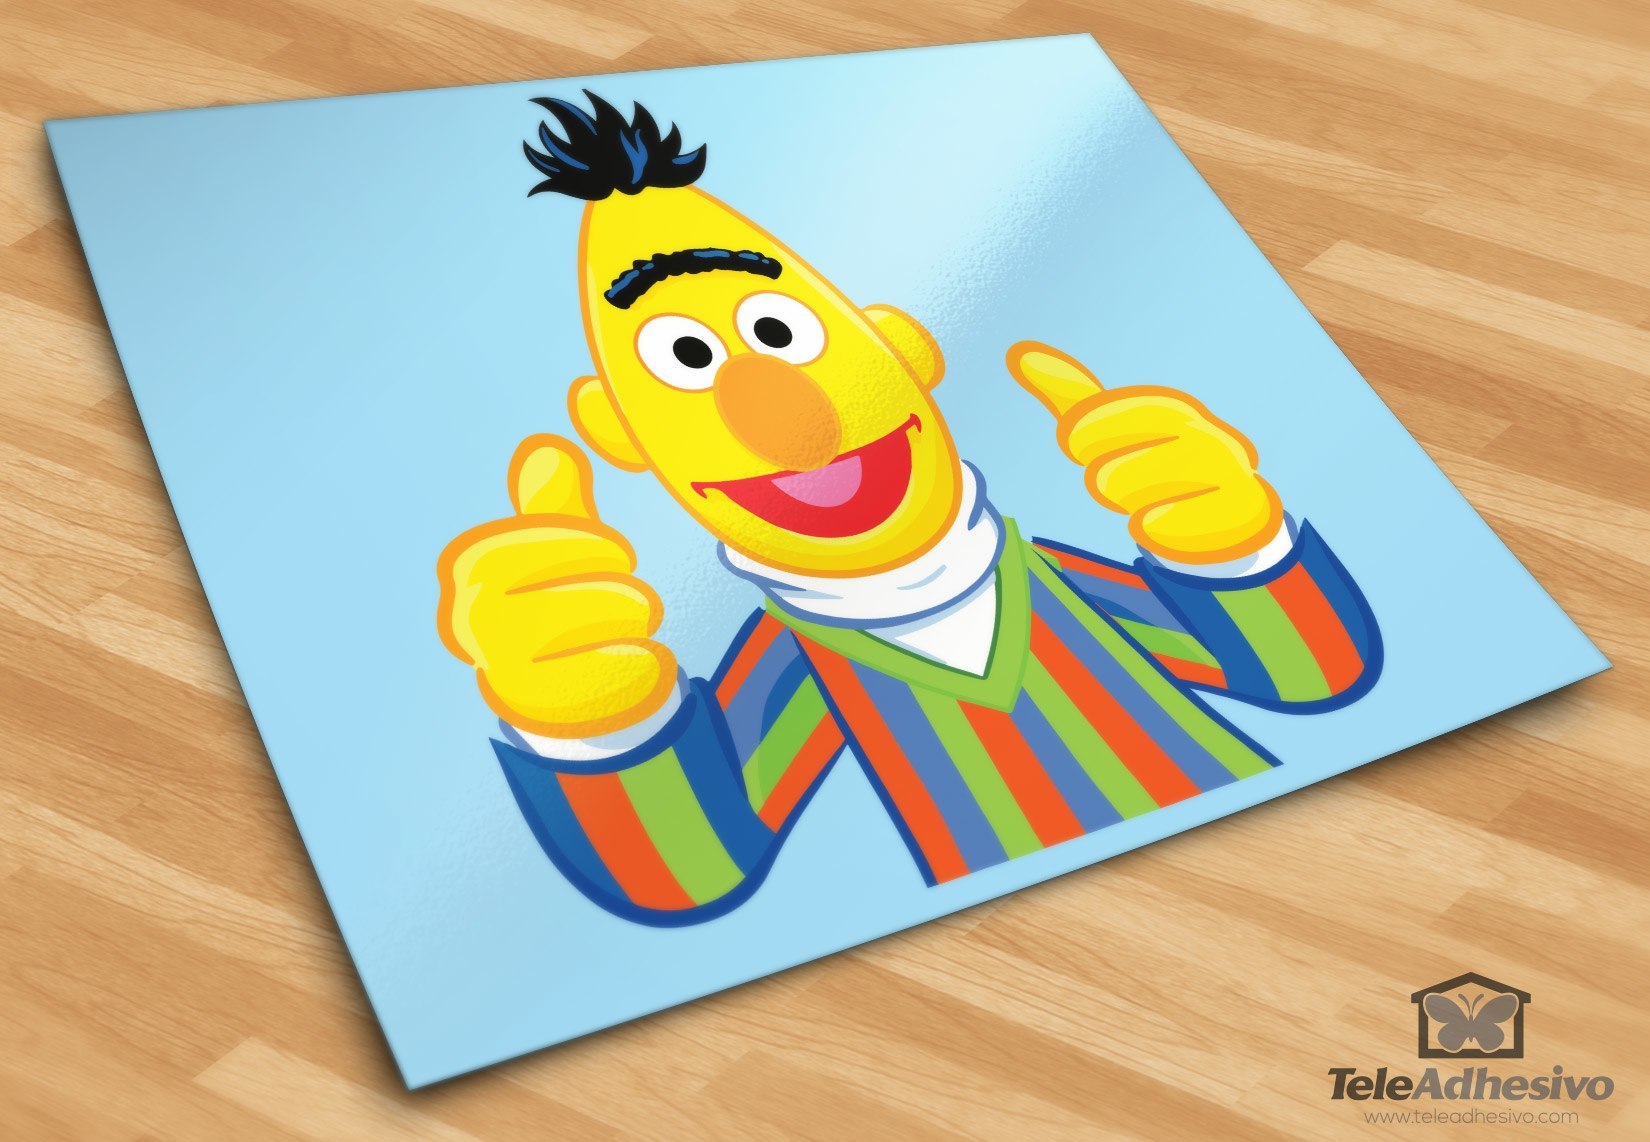 Stickers for Kids: Bert of Sesame Street